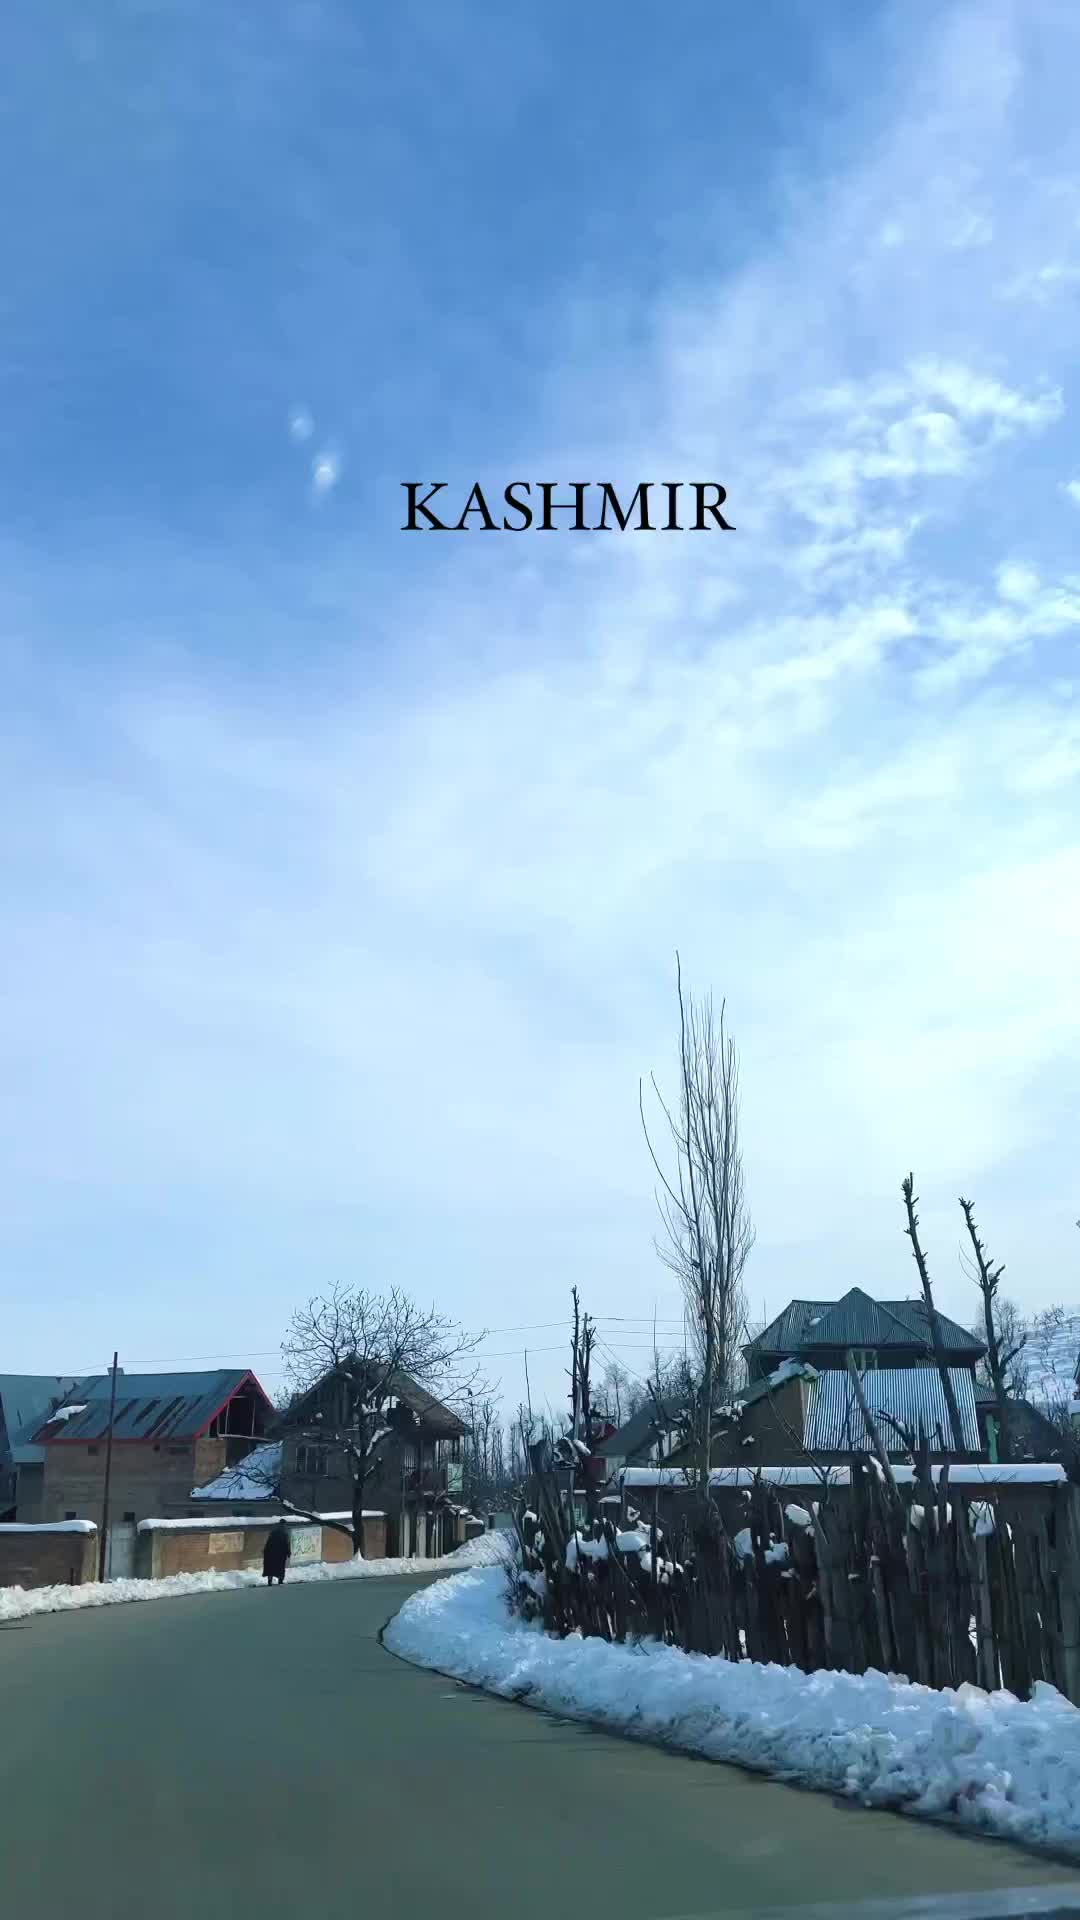 Winter Road Trip in Kashmir: A Peaceful Escape